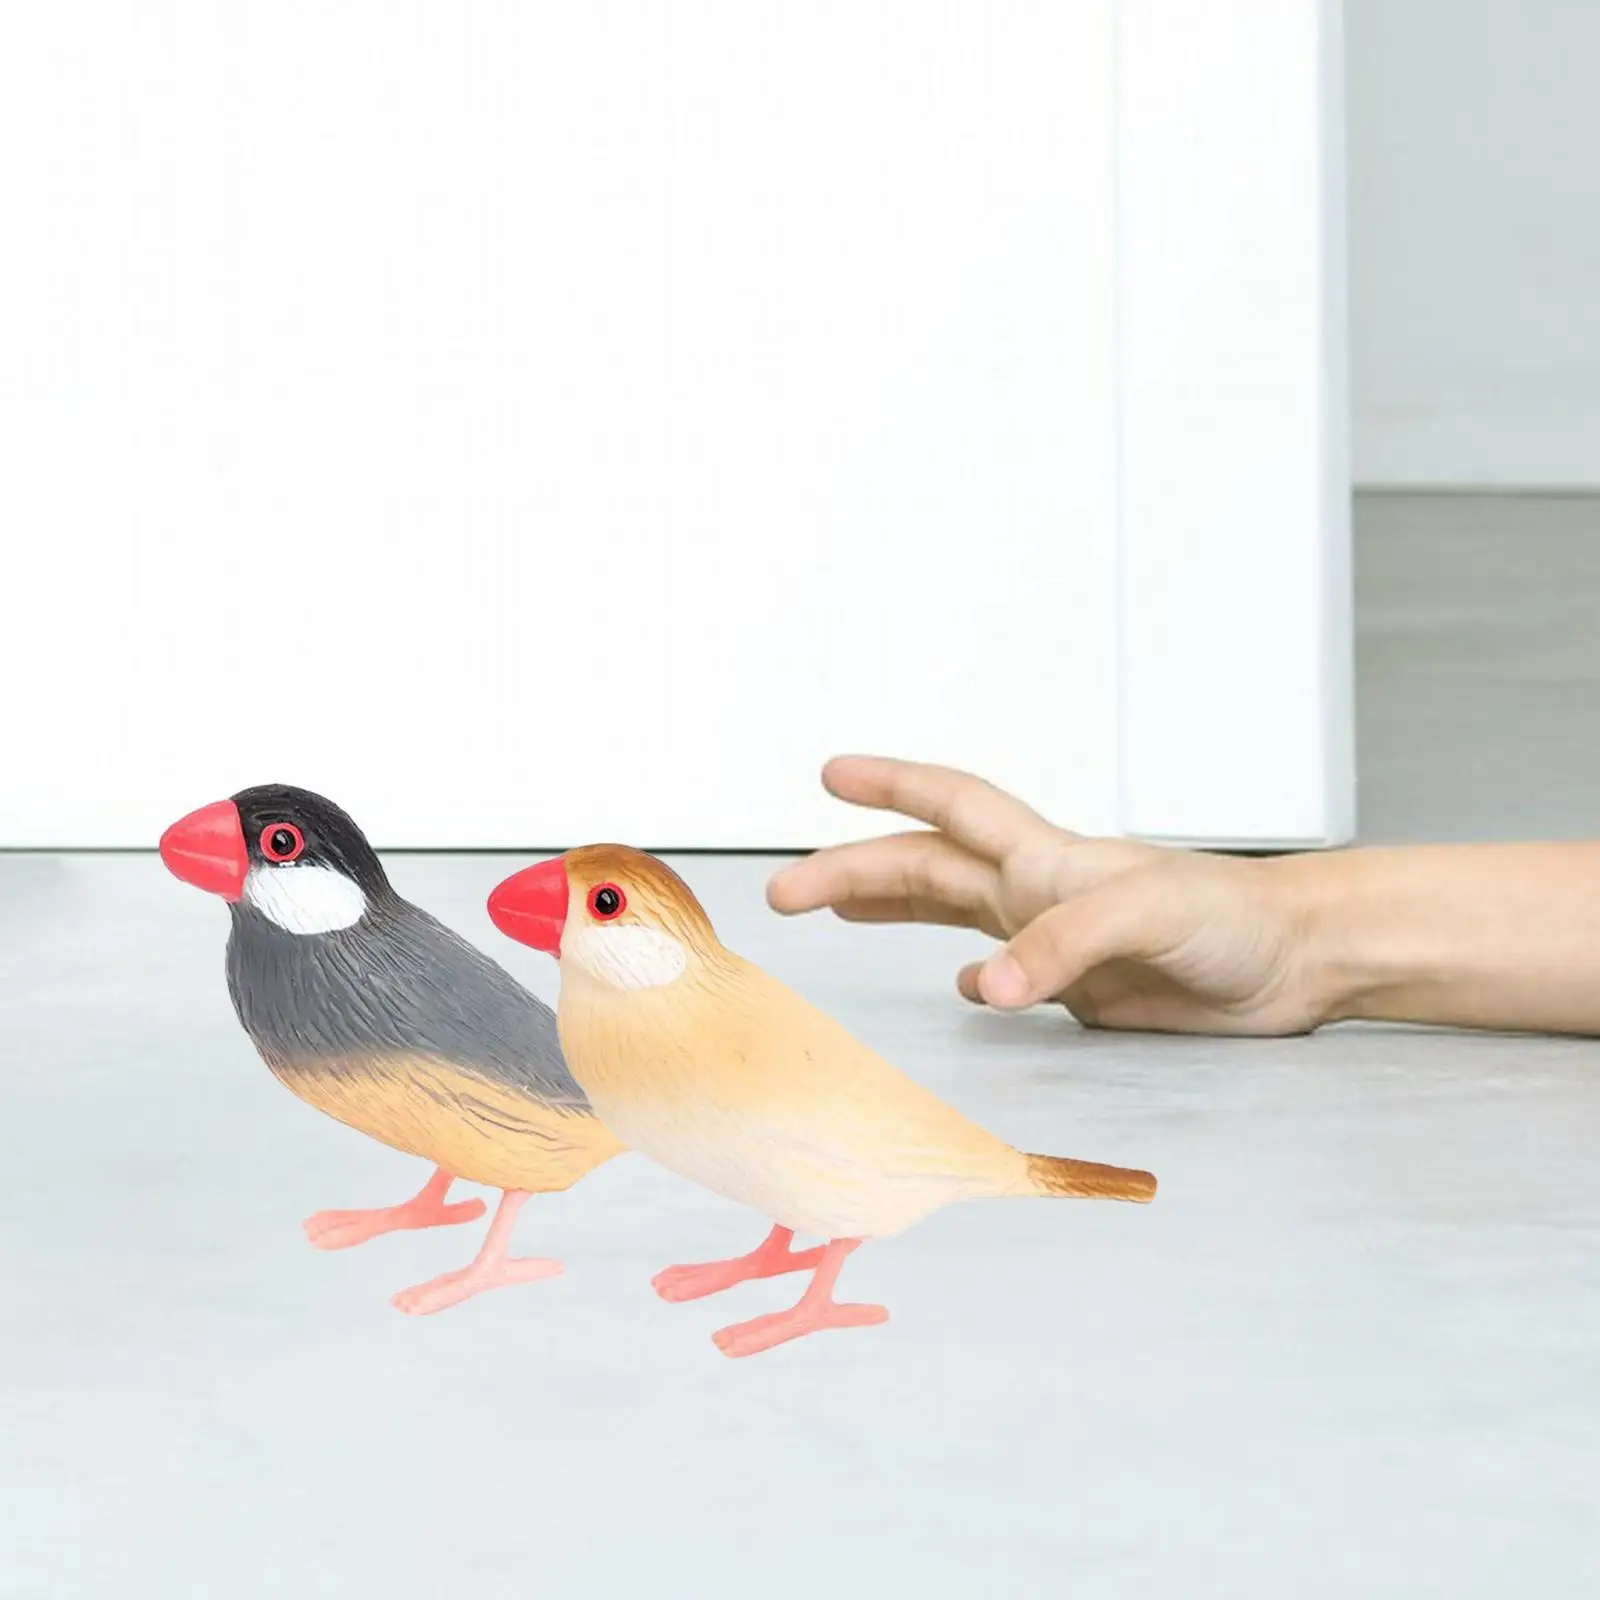 Simulation Bird Model Sculptures Home Decor Collection Small Bird Figures Toy Garden Bird Toy for Photo Props DIY Landscaping